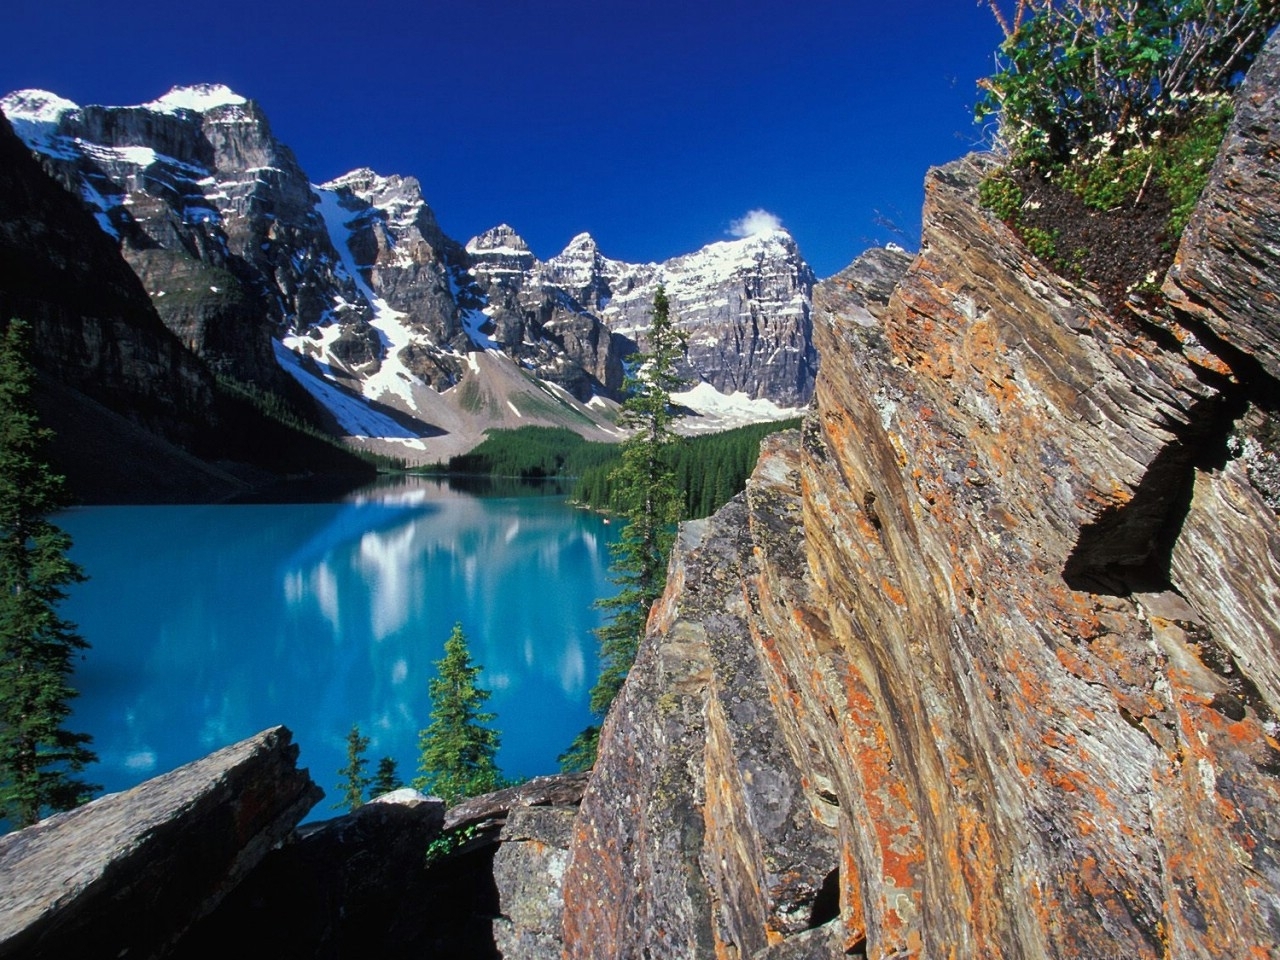 Widescreen image landscape, mountains